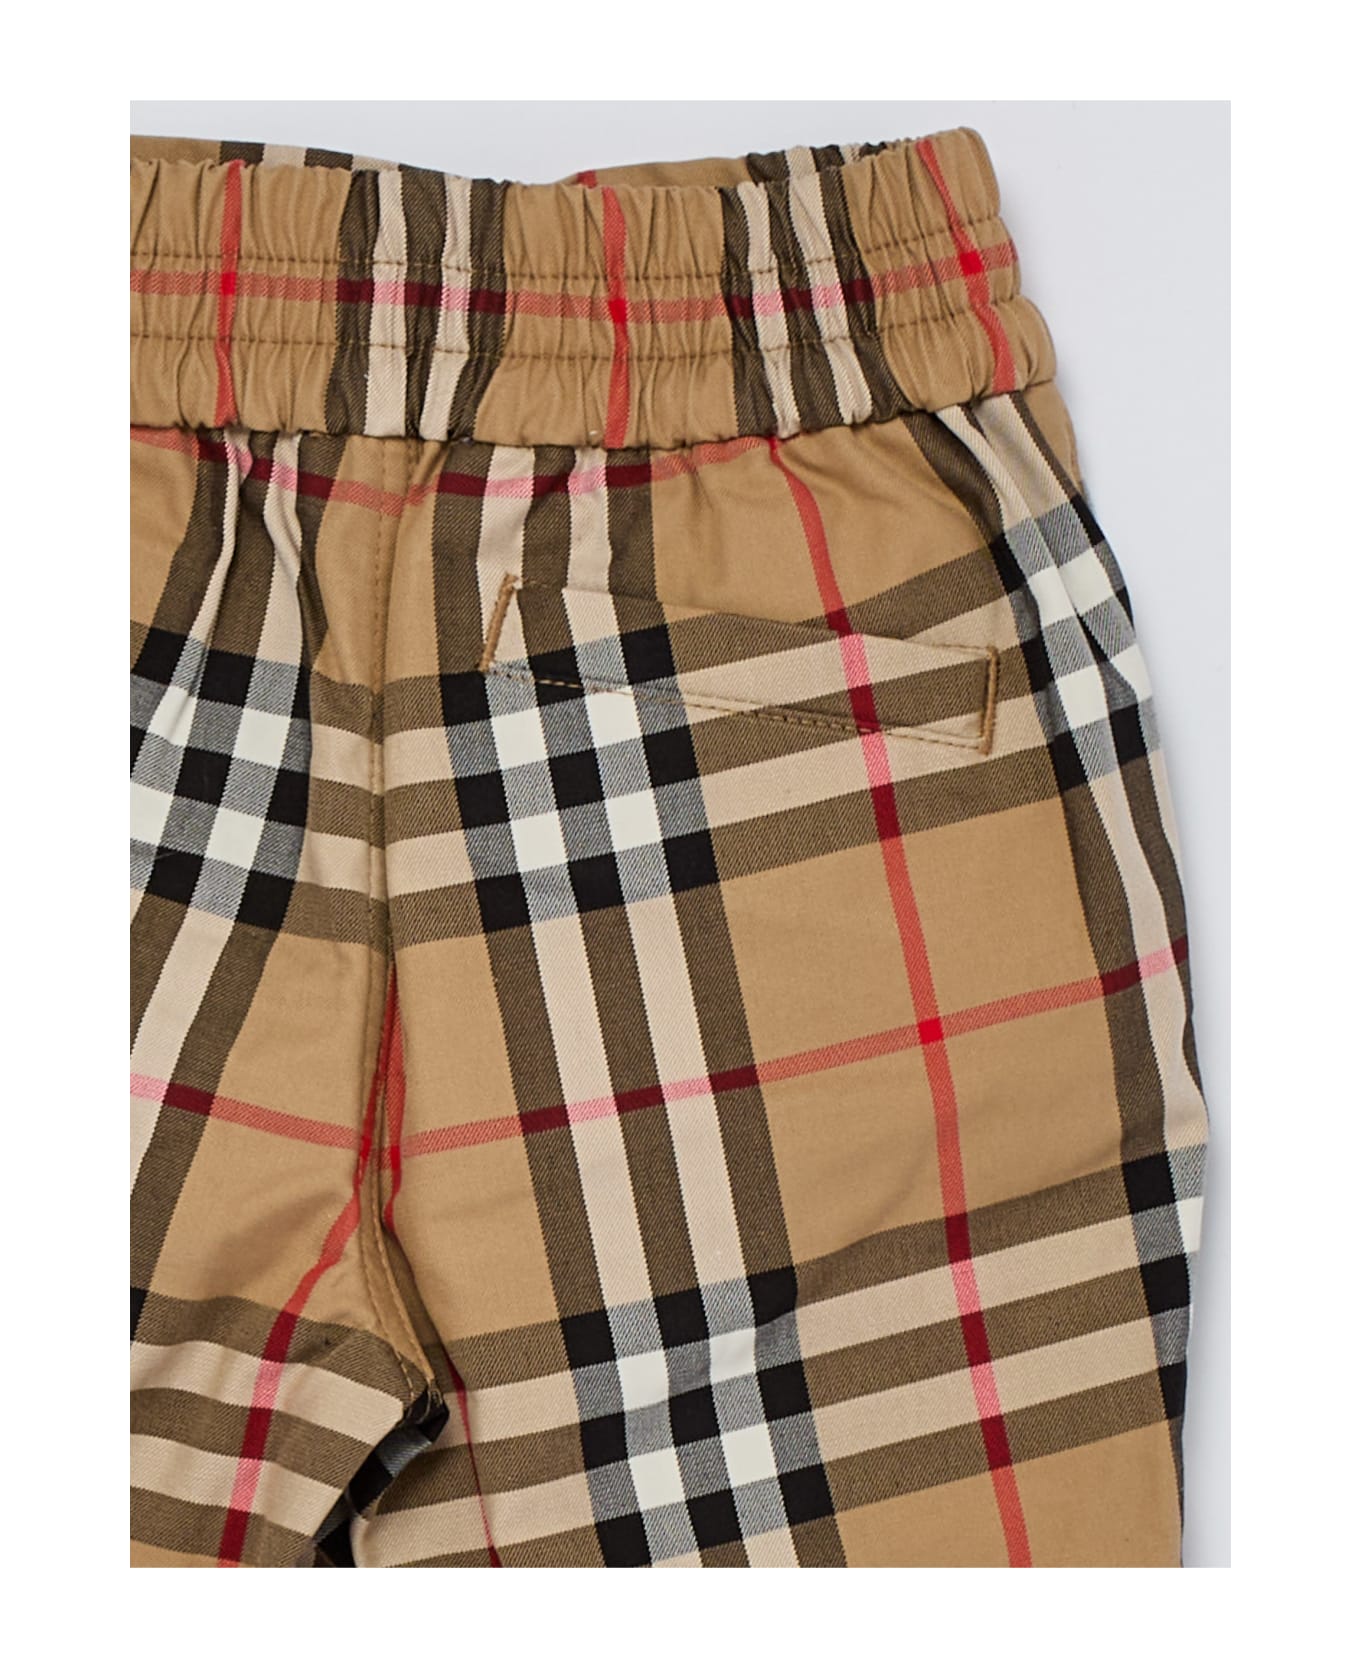 Burberry Hal Vint Shorts Shorts - CHECK BEIGE